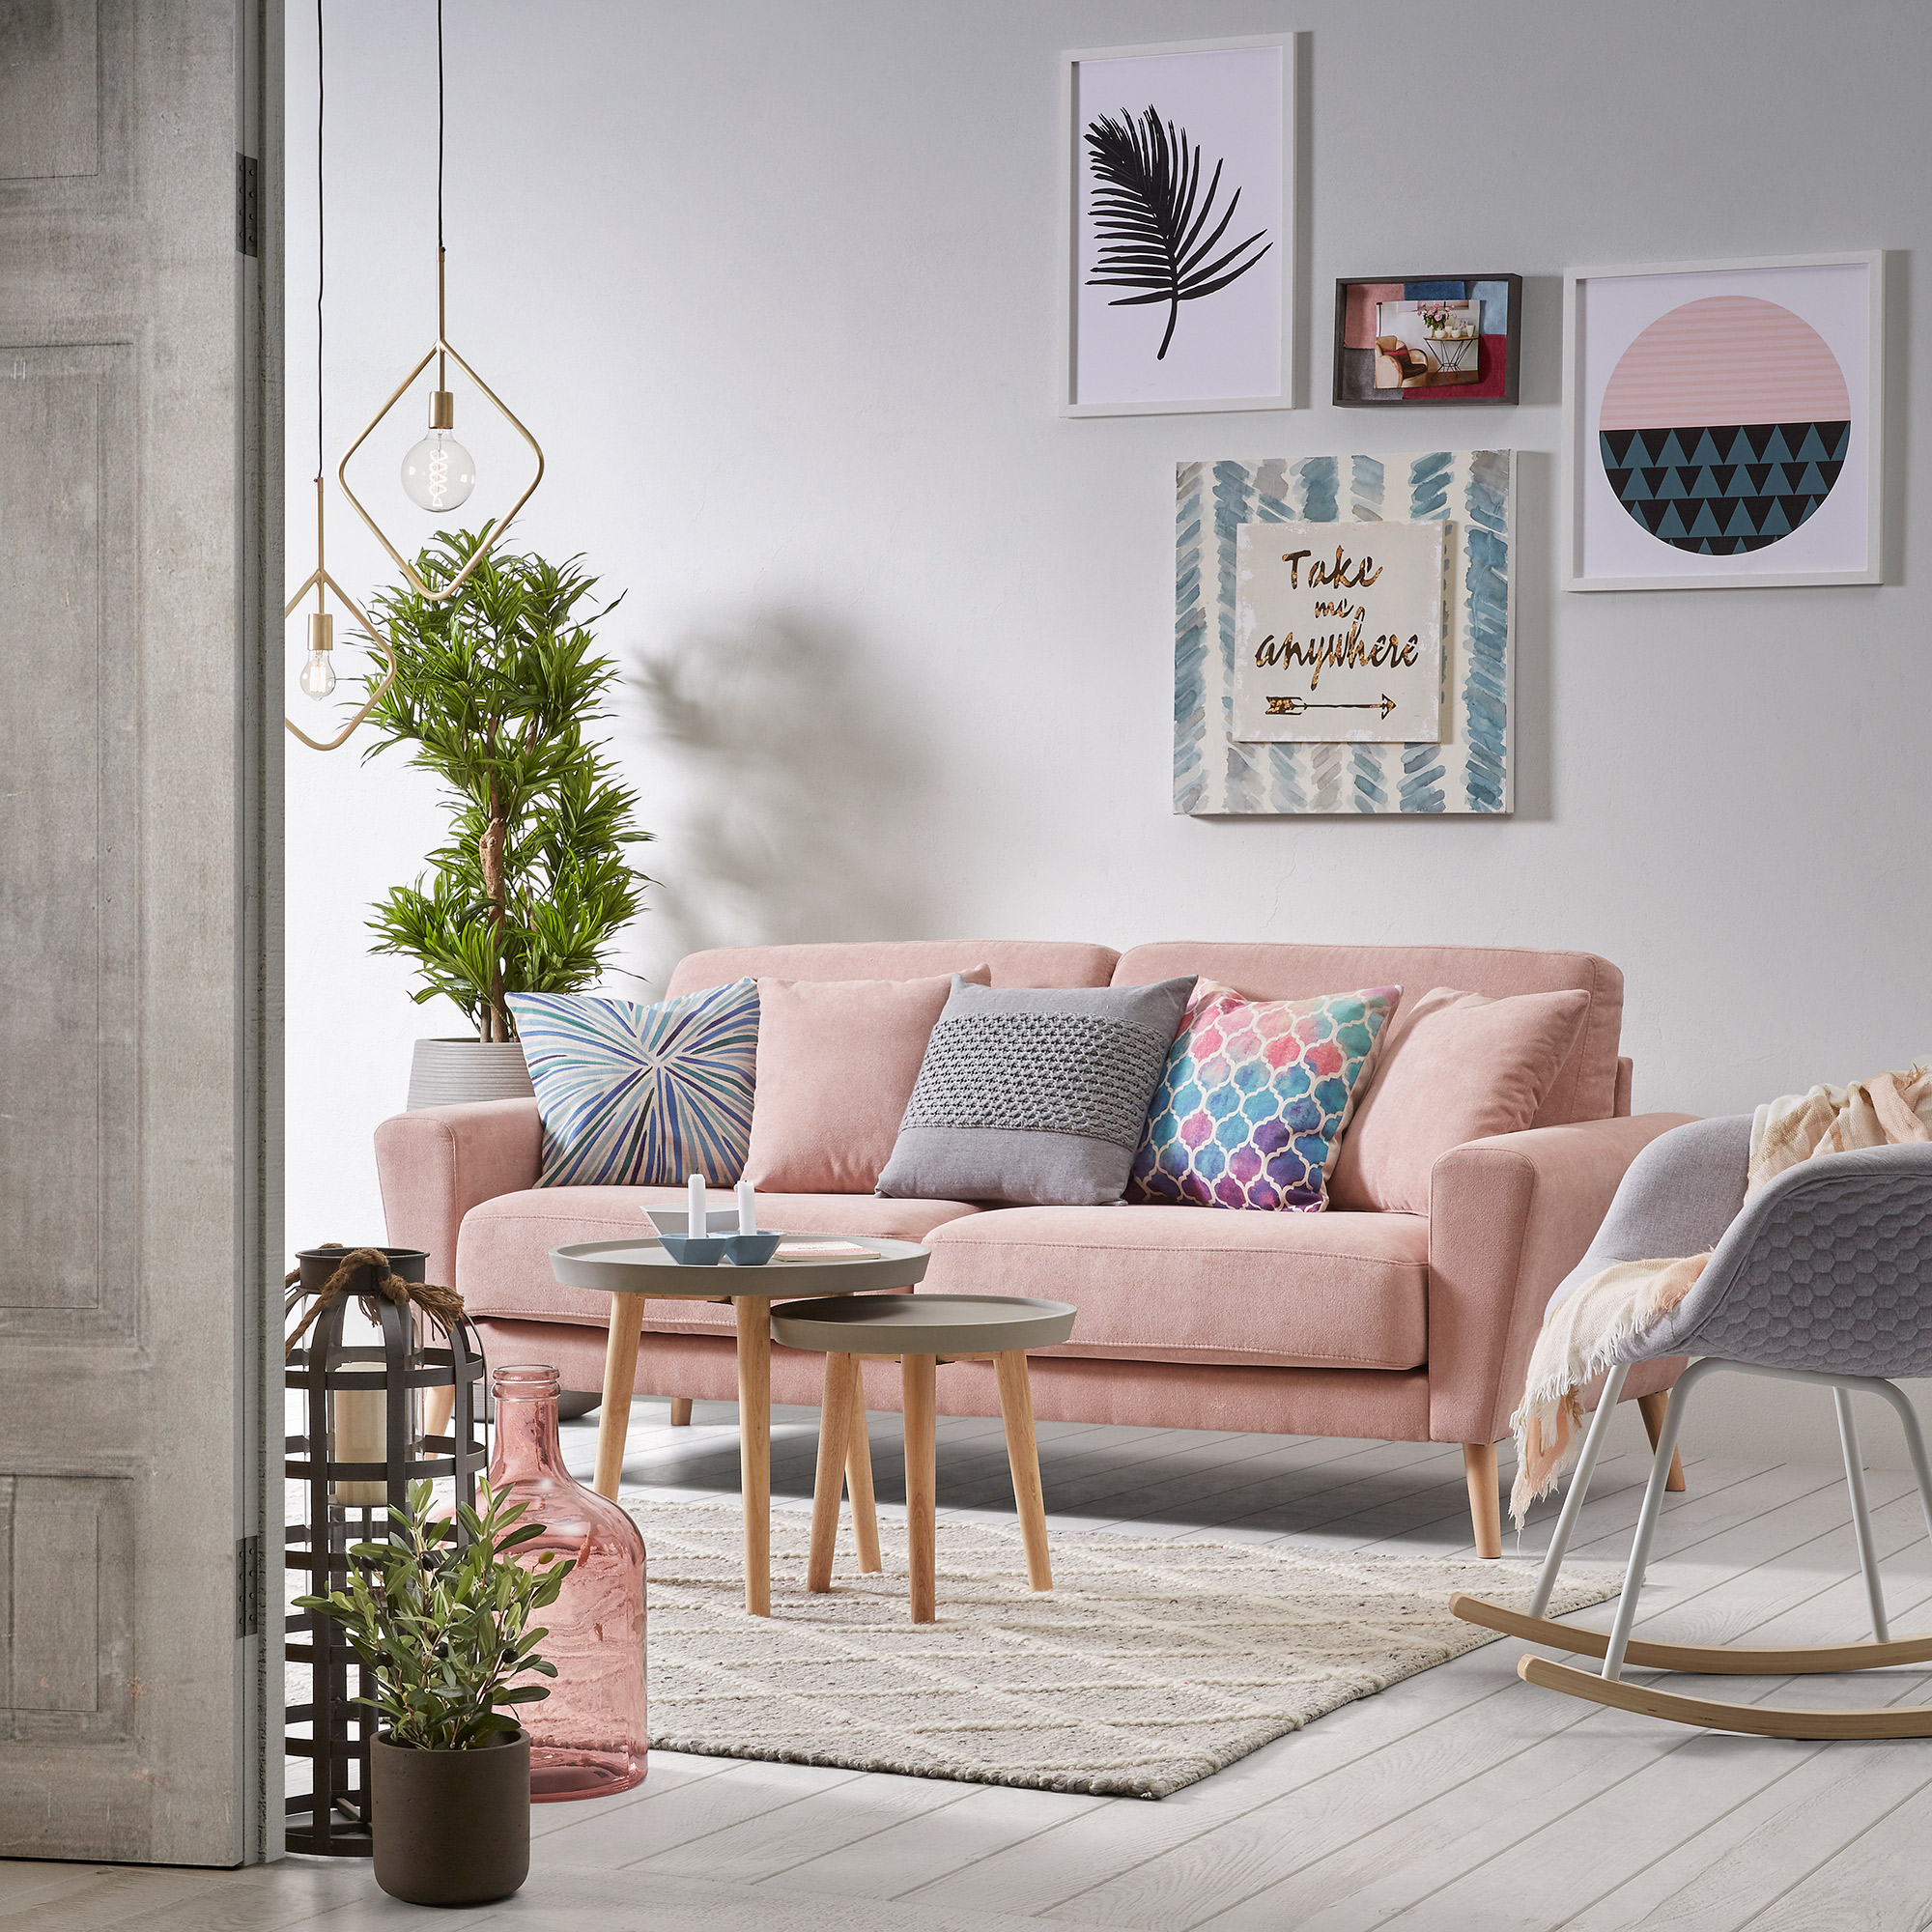 10 salas com sofás rosa millennial para se apaixonar – e onde comprá-los |  CLAUDIA